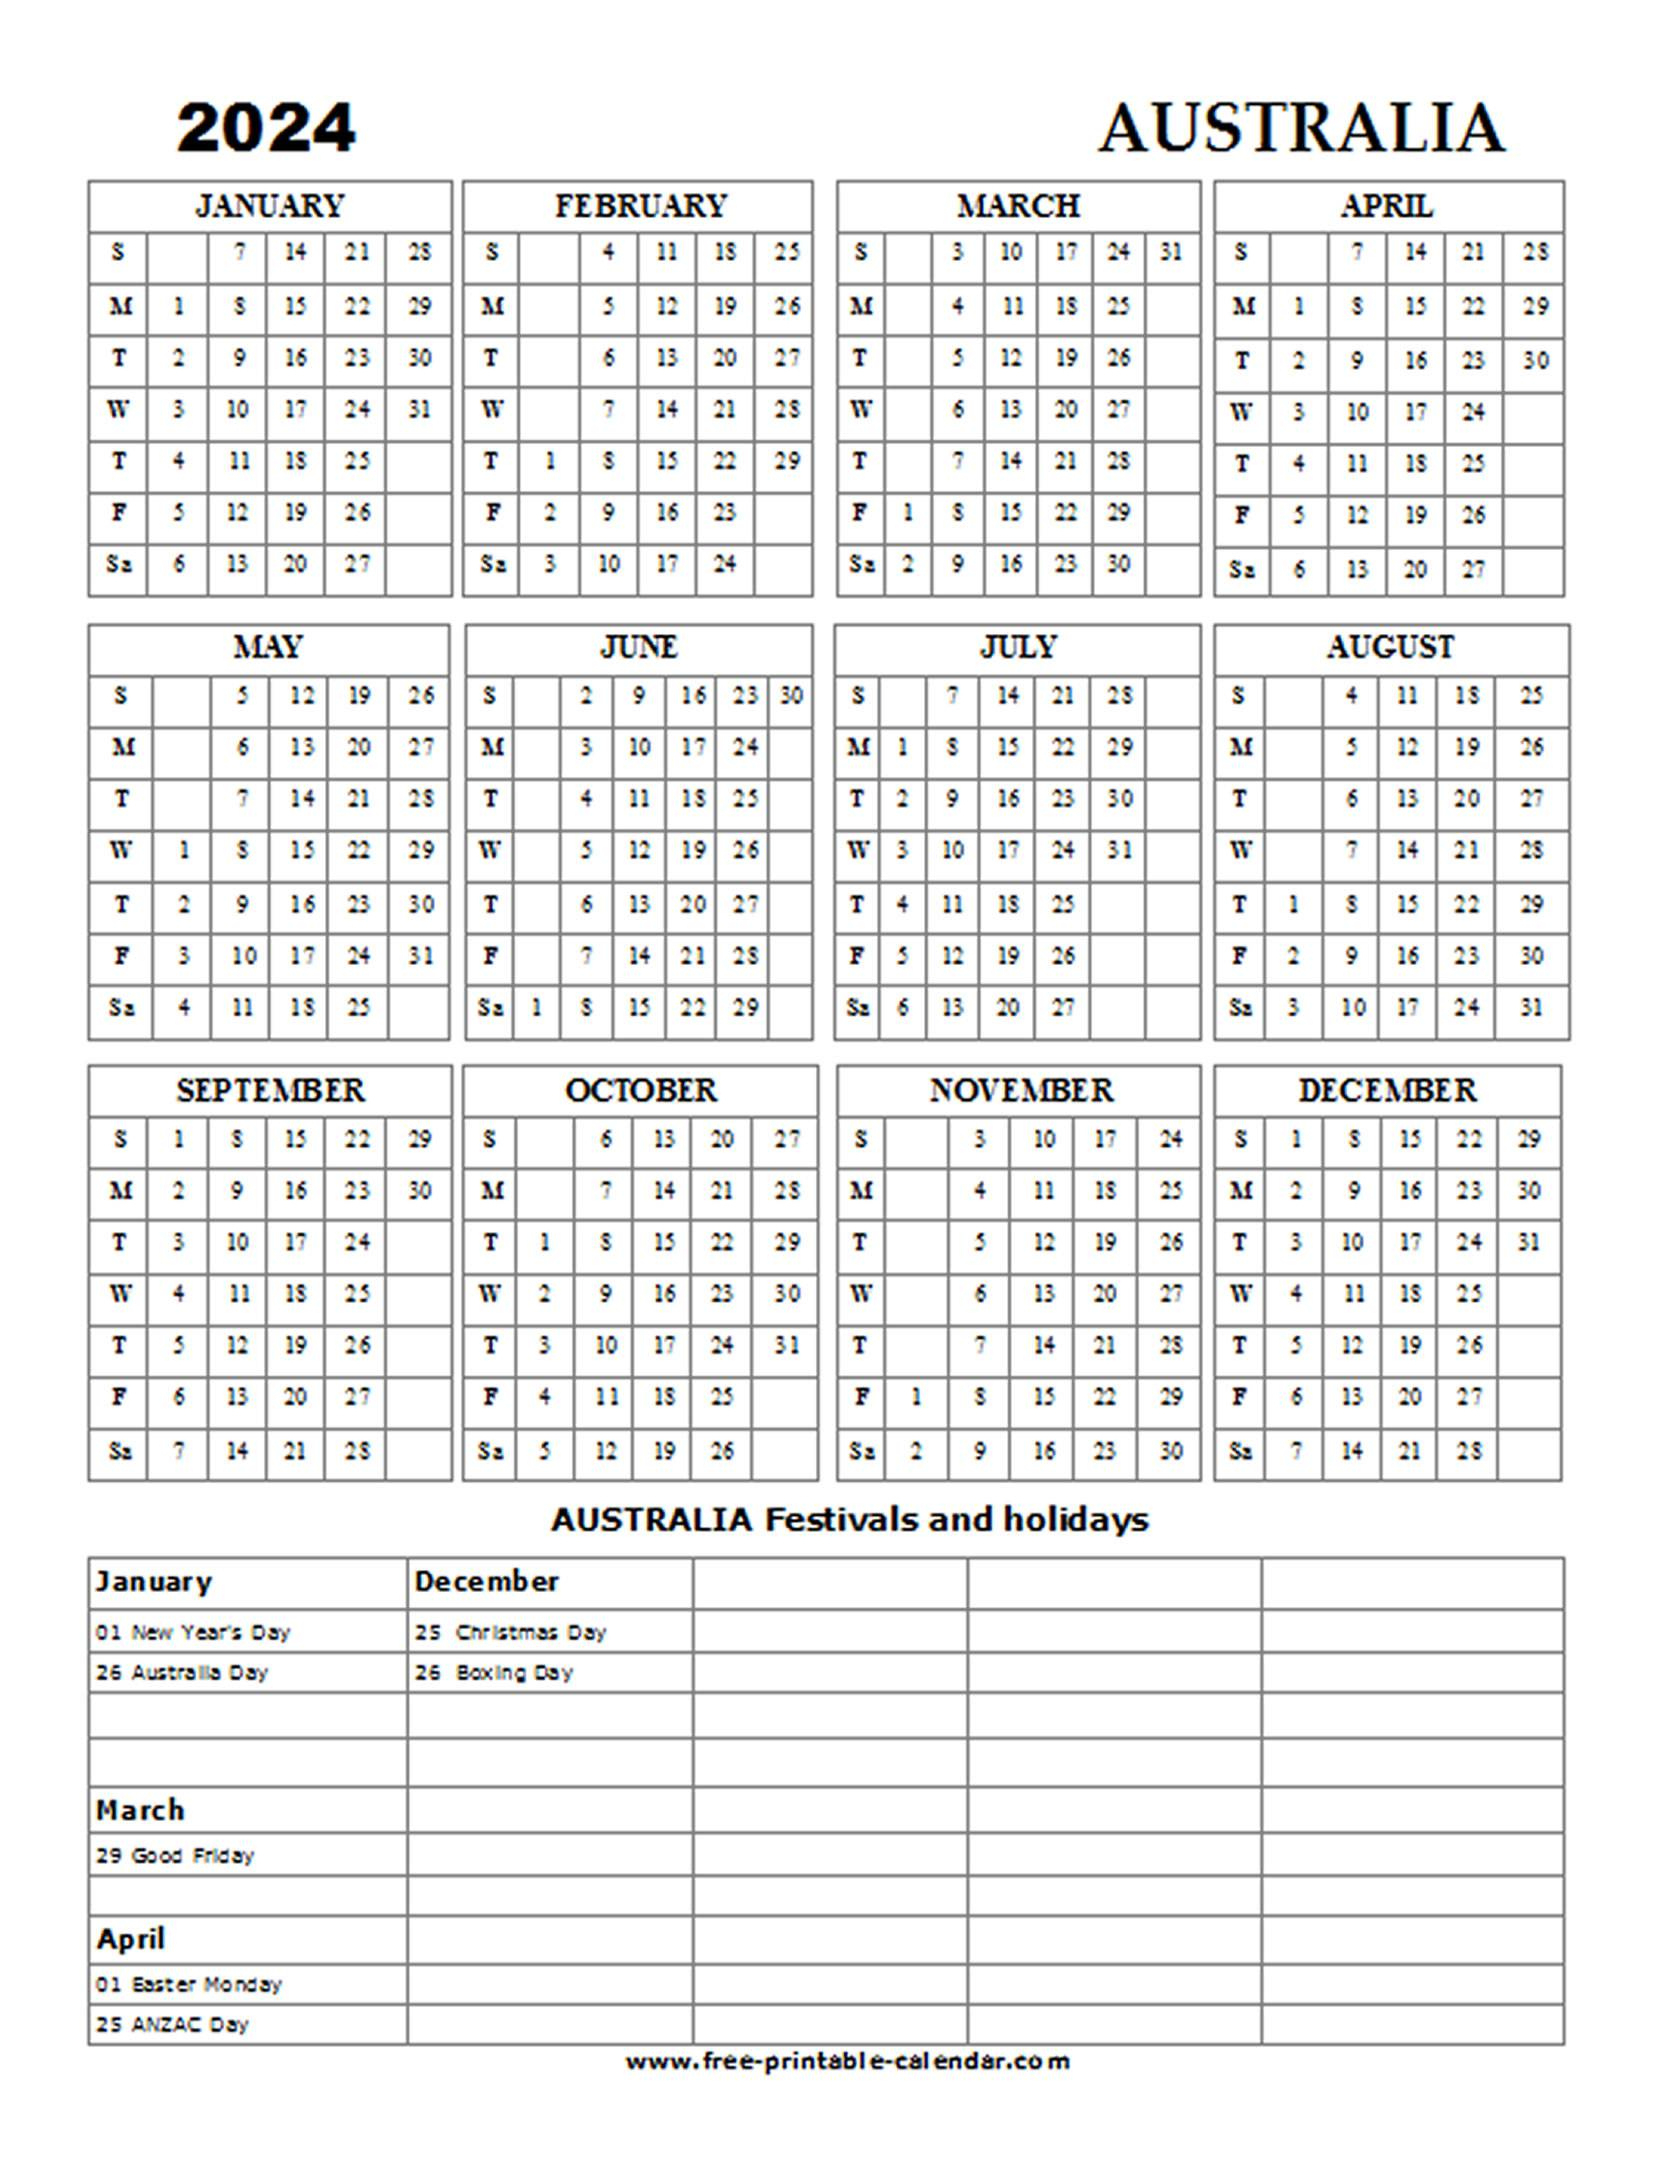 2024 Australia Holiday Calendar - Free-Printable-Calendar | 2024 Victorian Calendar Printable